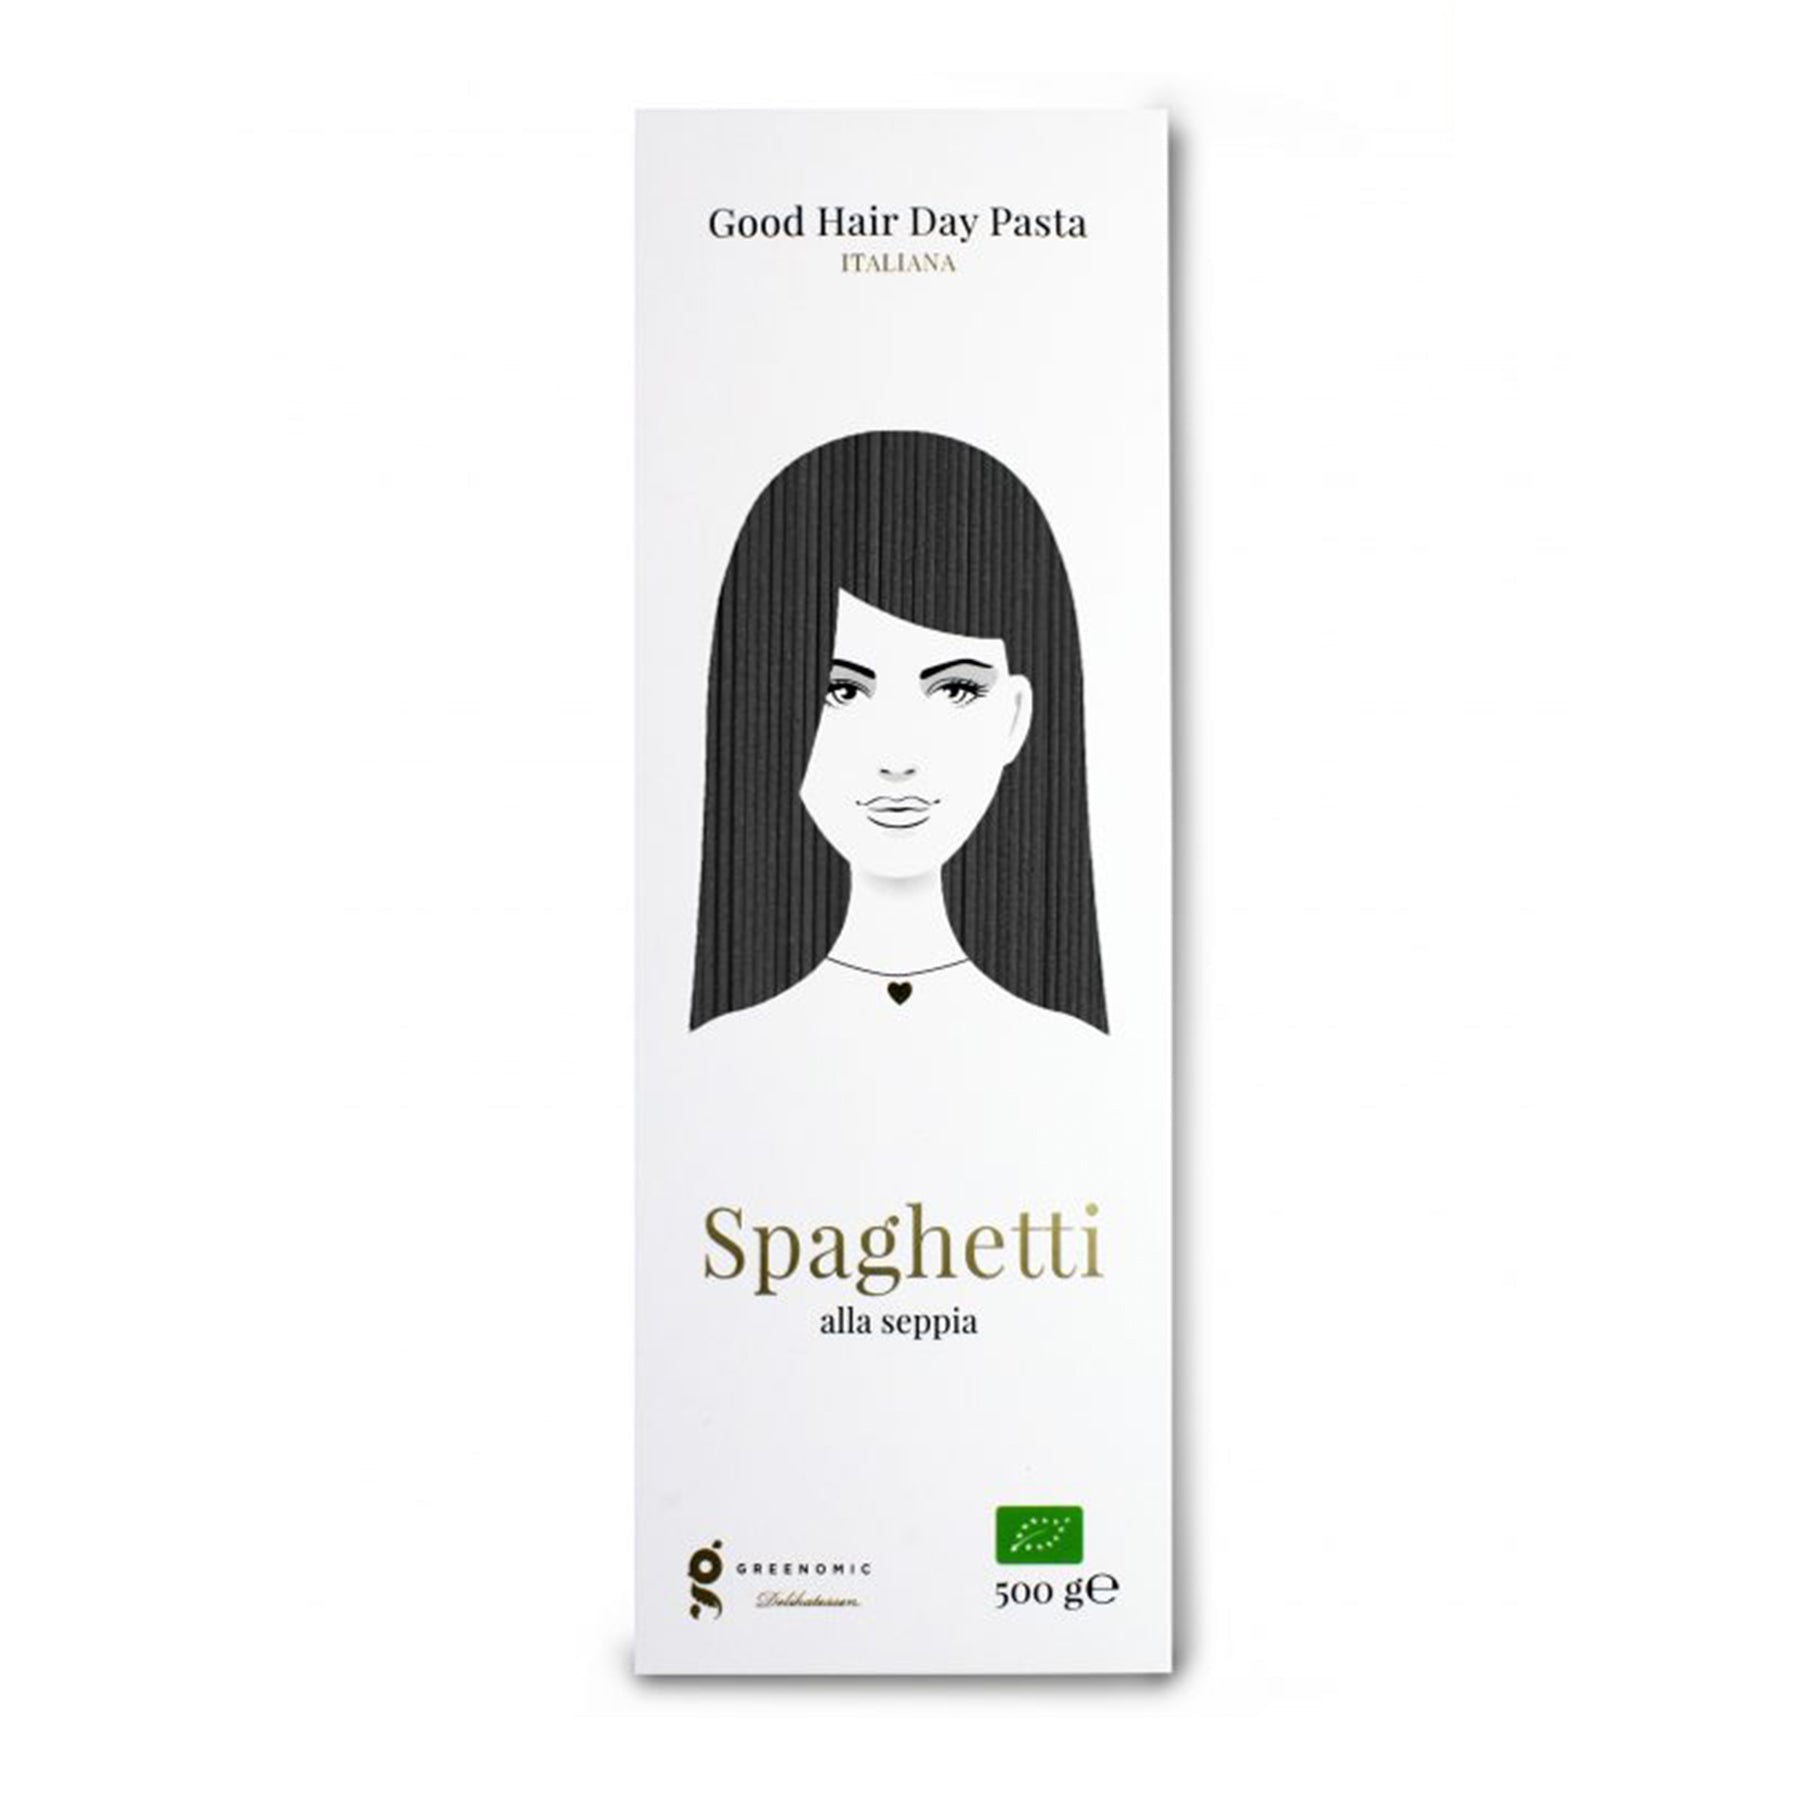 Spaghetti alla Seppia BIO - Good Hair Day Pasta